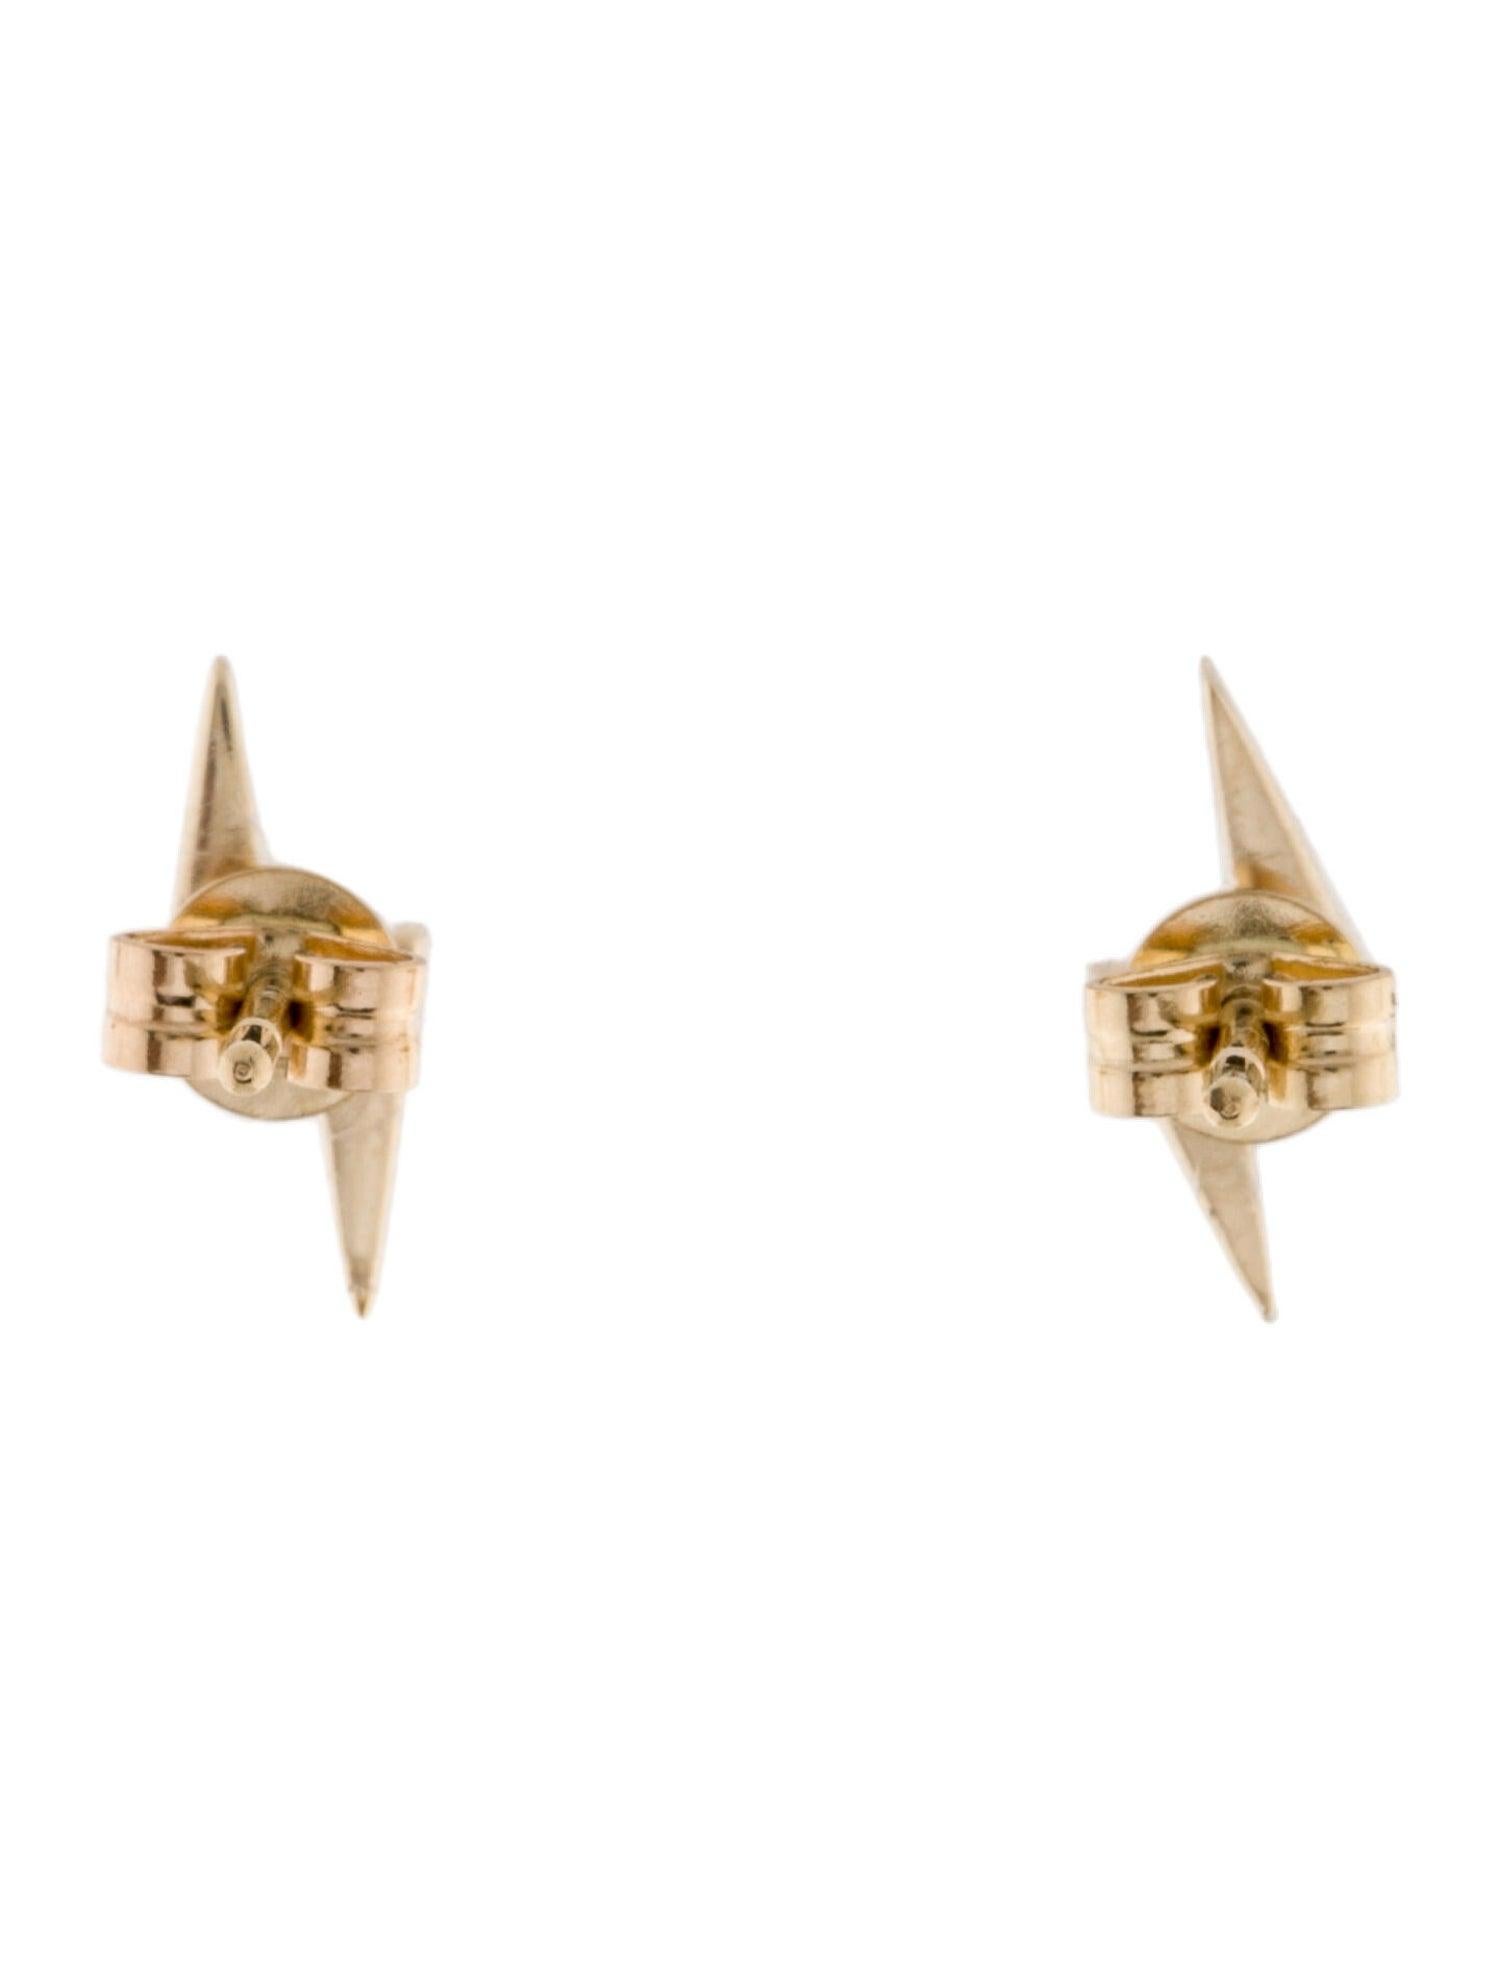 0.12 carat diamond earrings